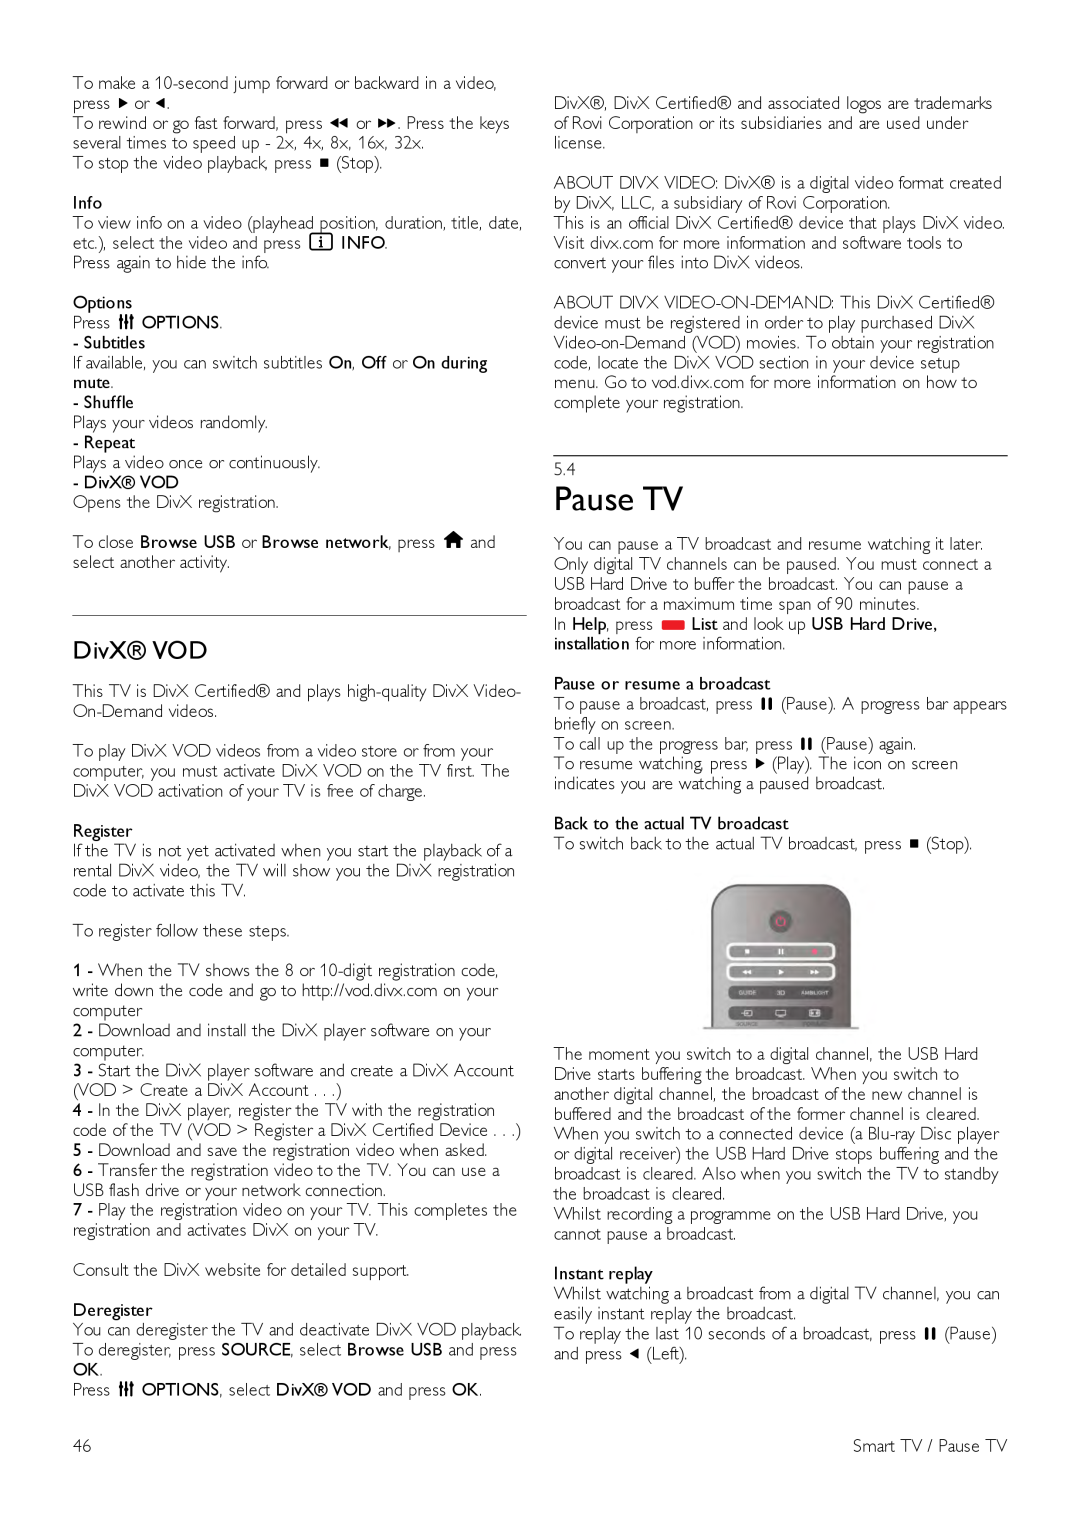 Philips 46PFL7007, 40PFL7007, 55PFL7007 manual Pause TV, DivX VOD 